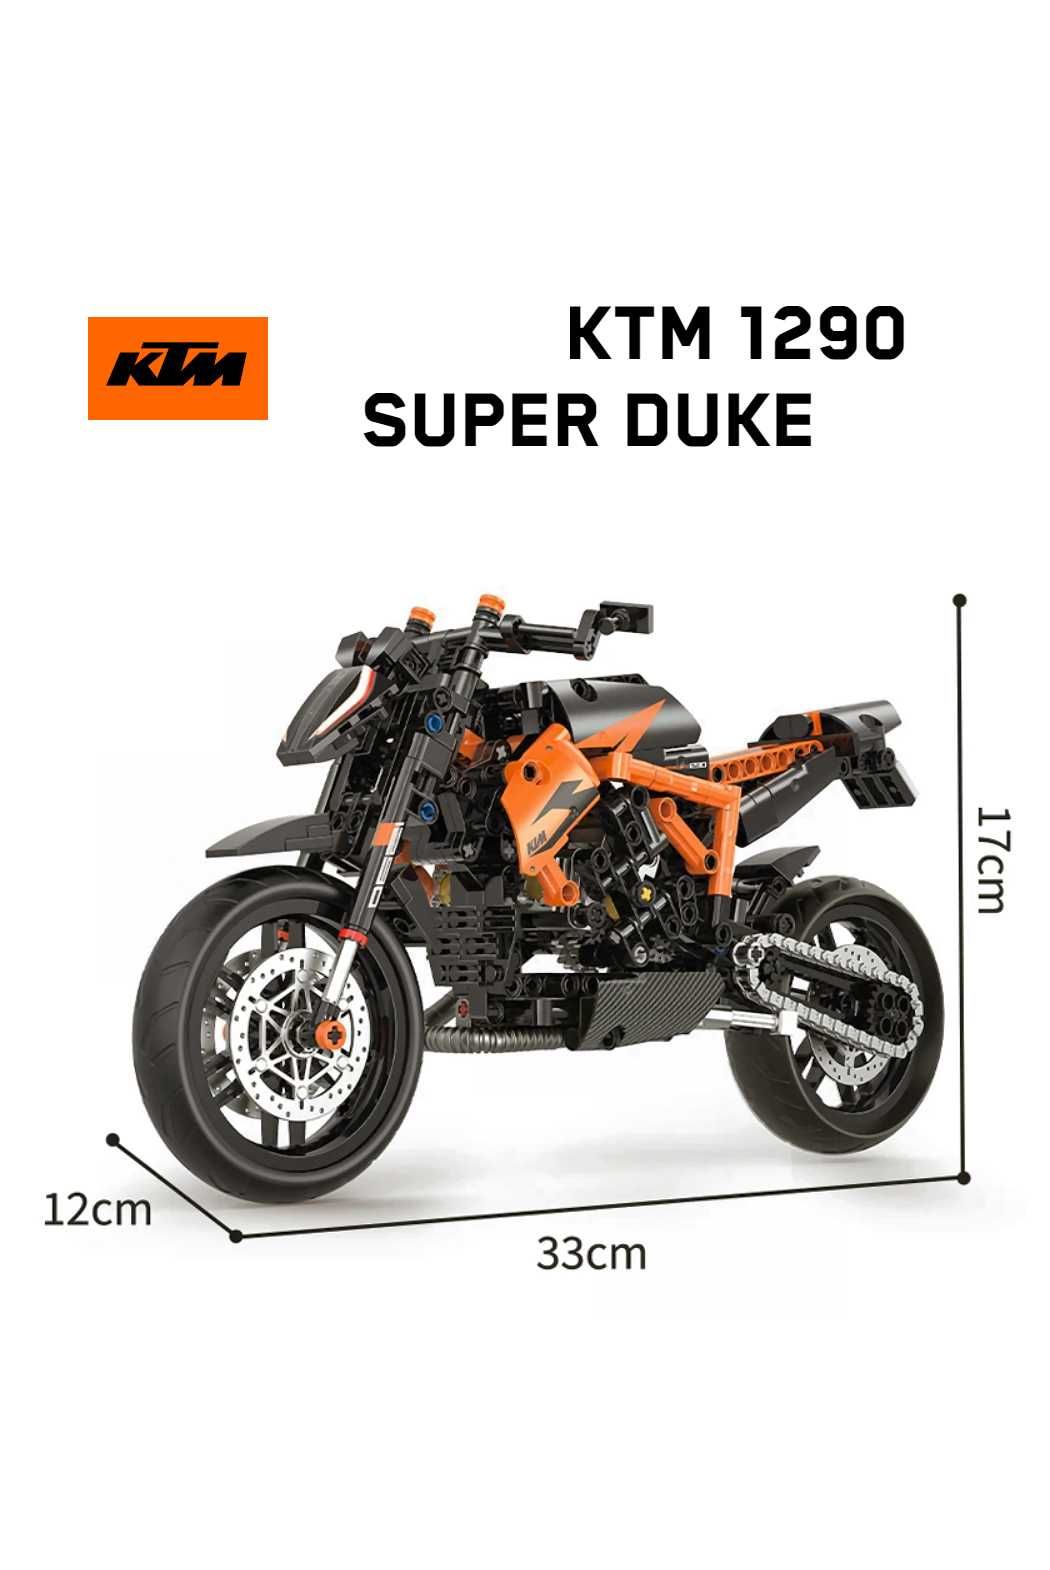 Mota KTM 1290 Super Duke tipo lego - Entrega gratuita